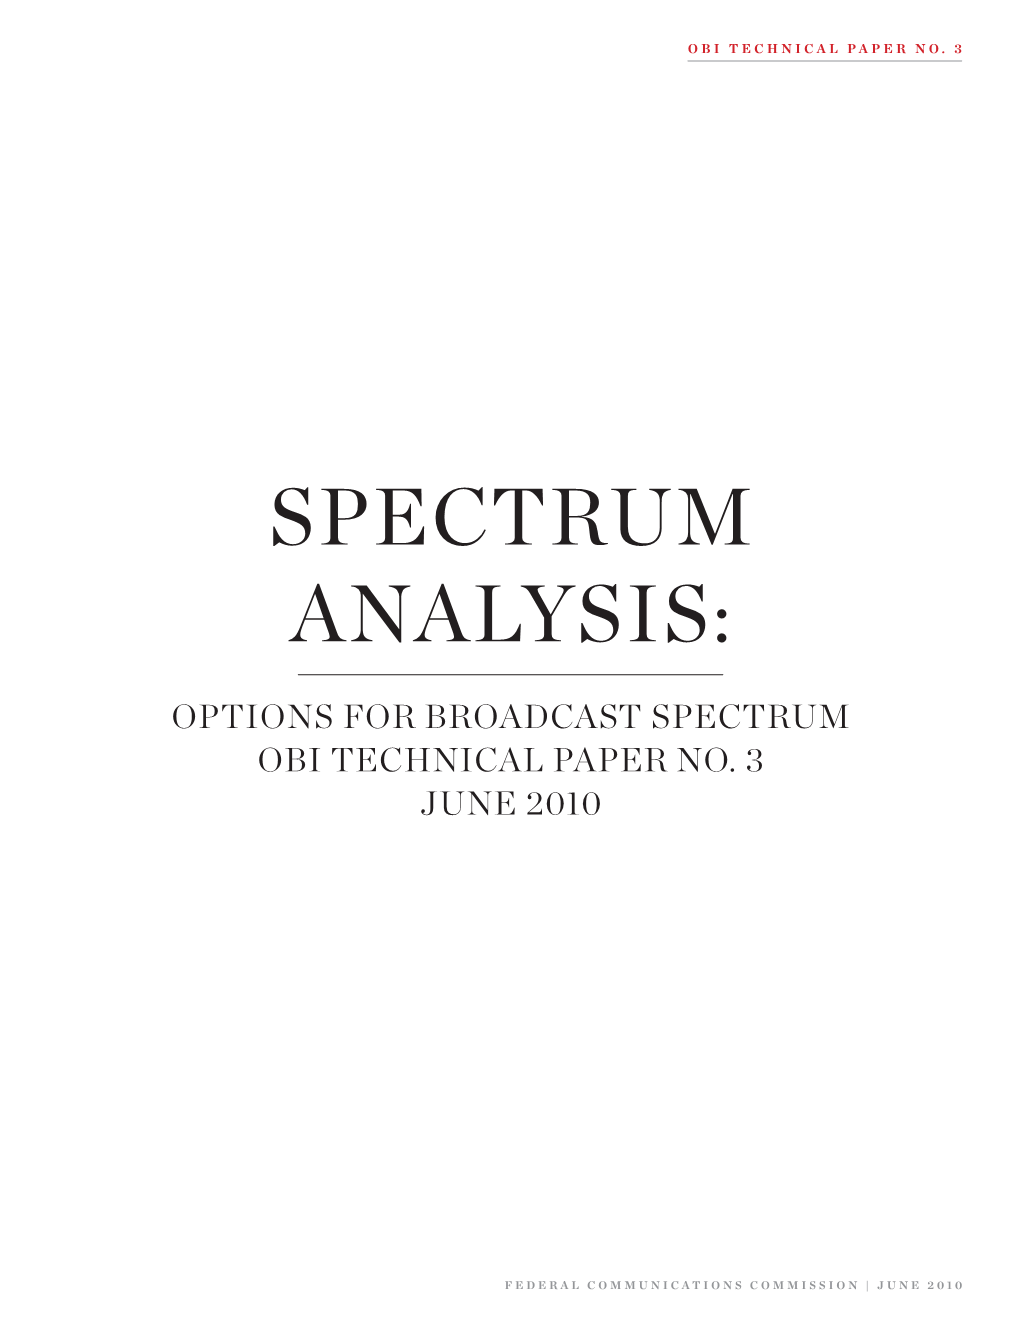 SPECTRUM Analysis